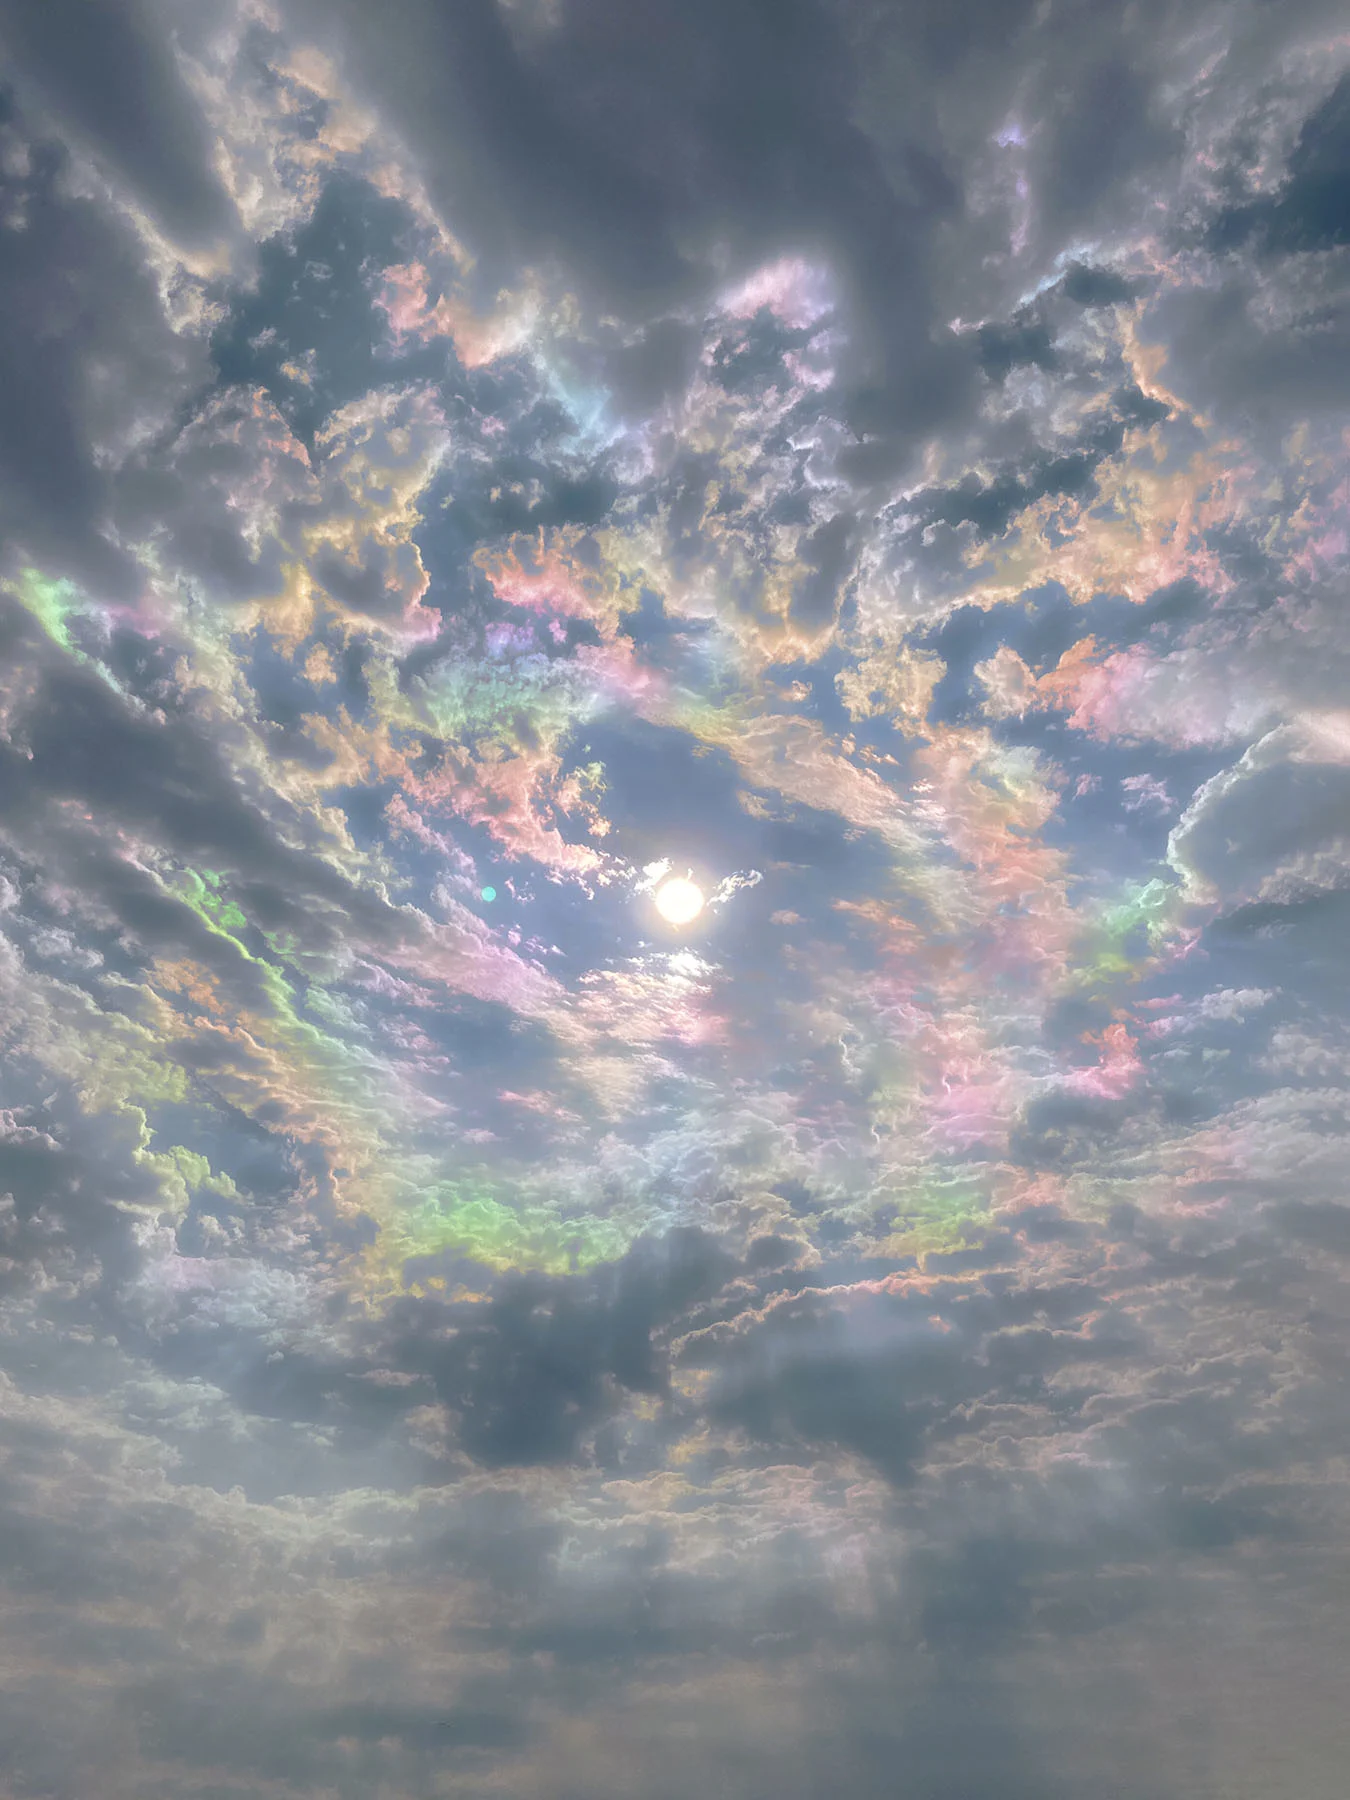 A photograph of iridescent clouds spiraling inward towards a solitary sun.